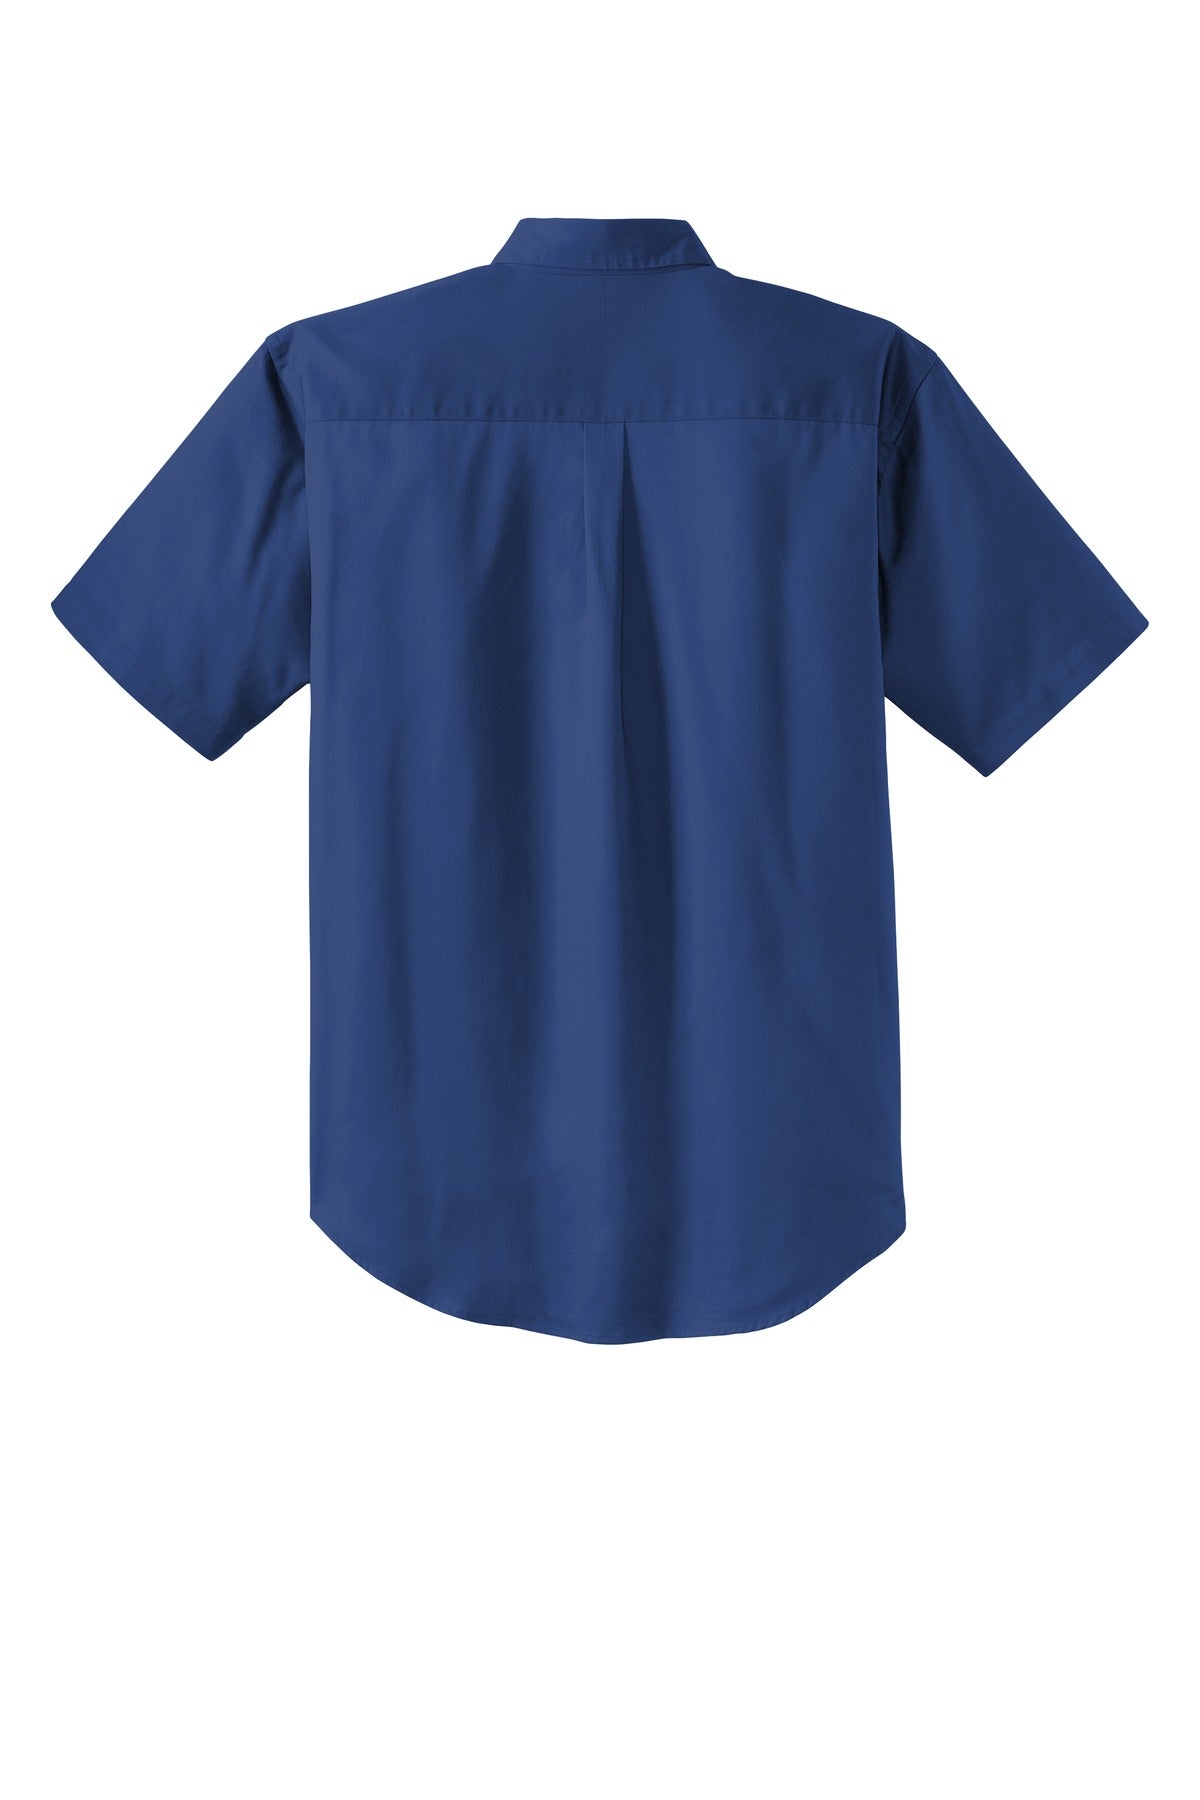 CornerStone - Short Sleeve SuperPro™ Twill Shirt. SP18